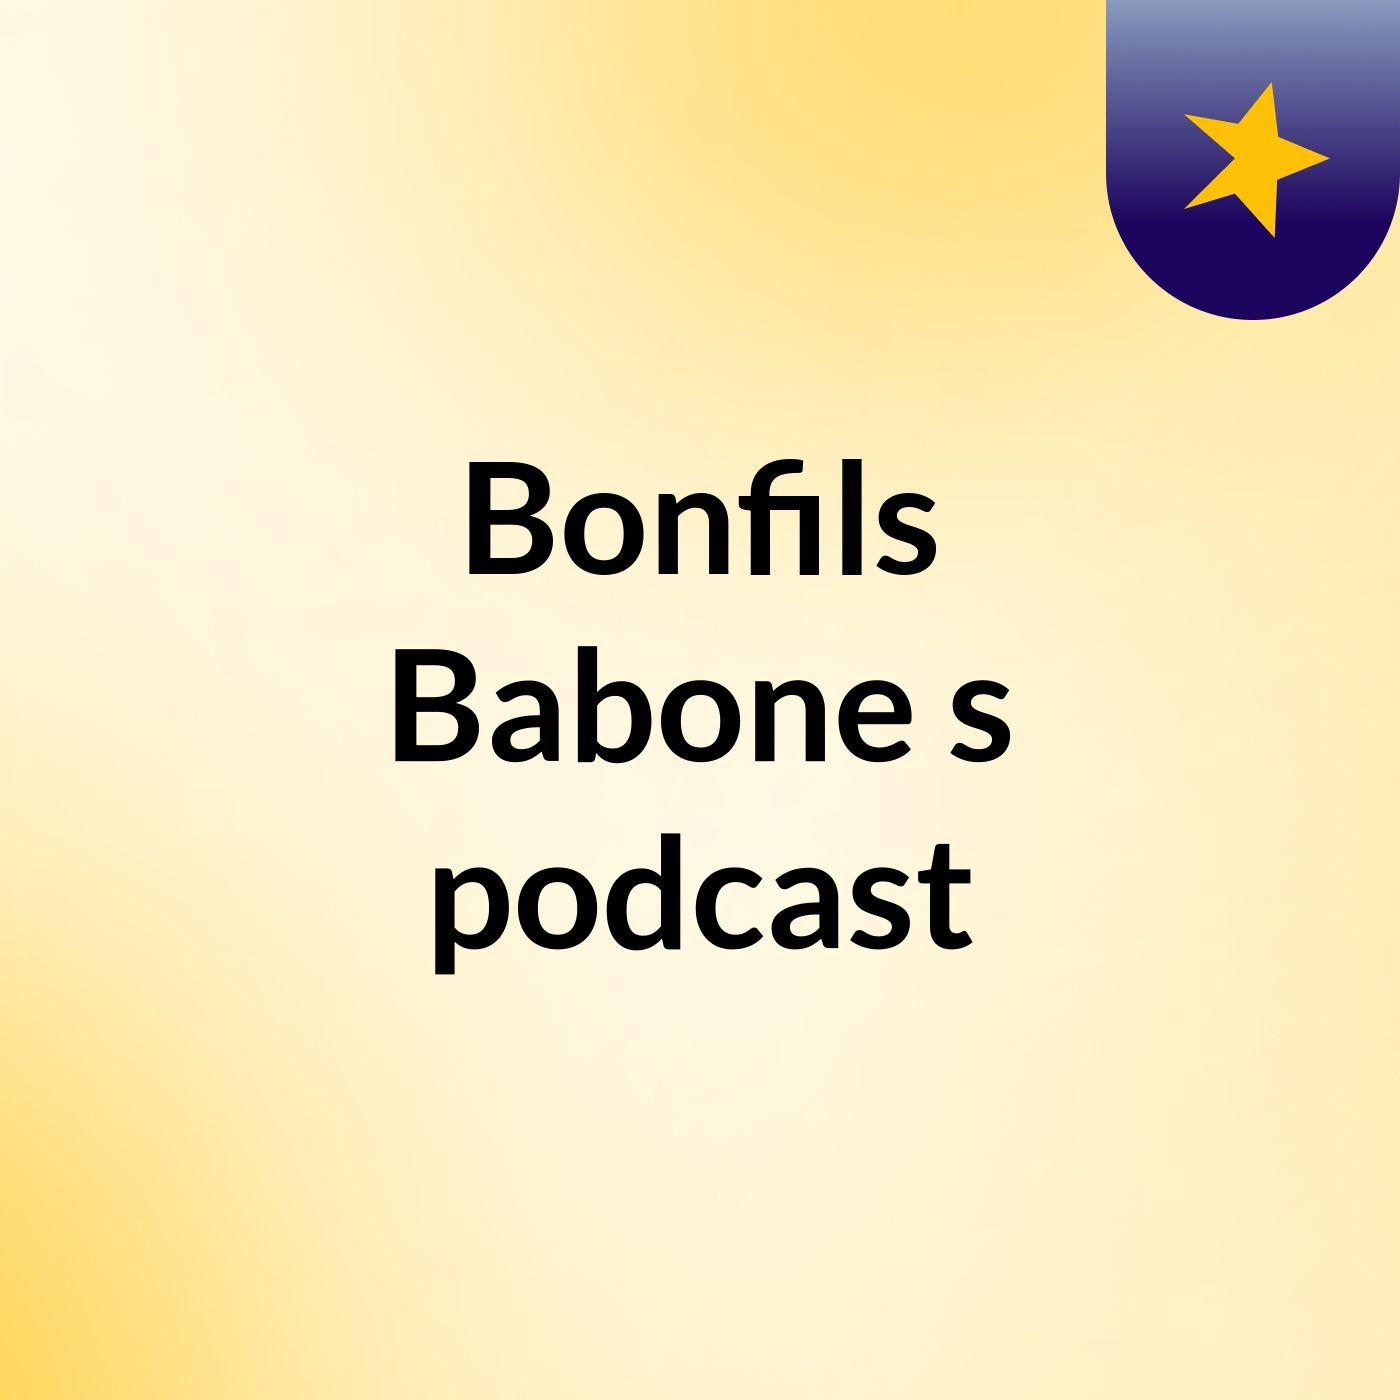 Bonfils Babone's podcast